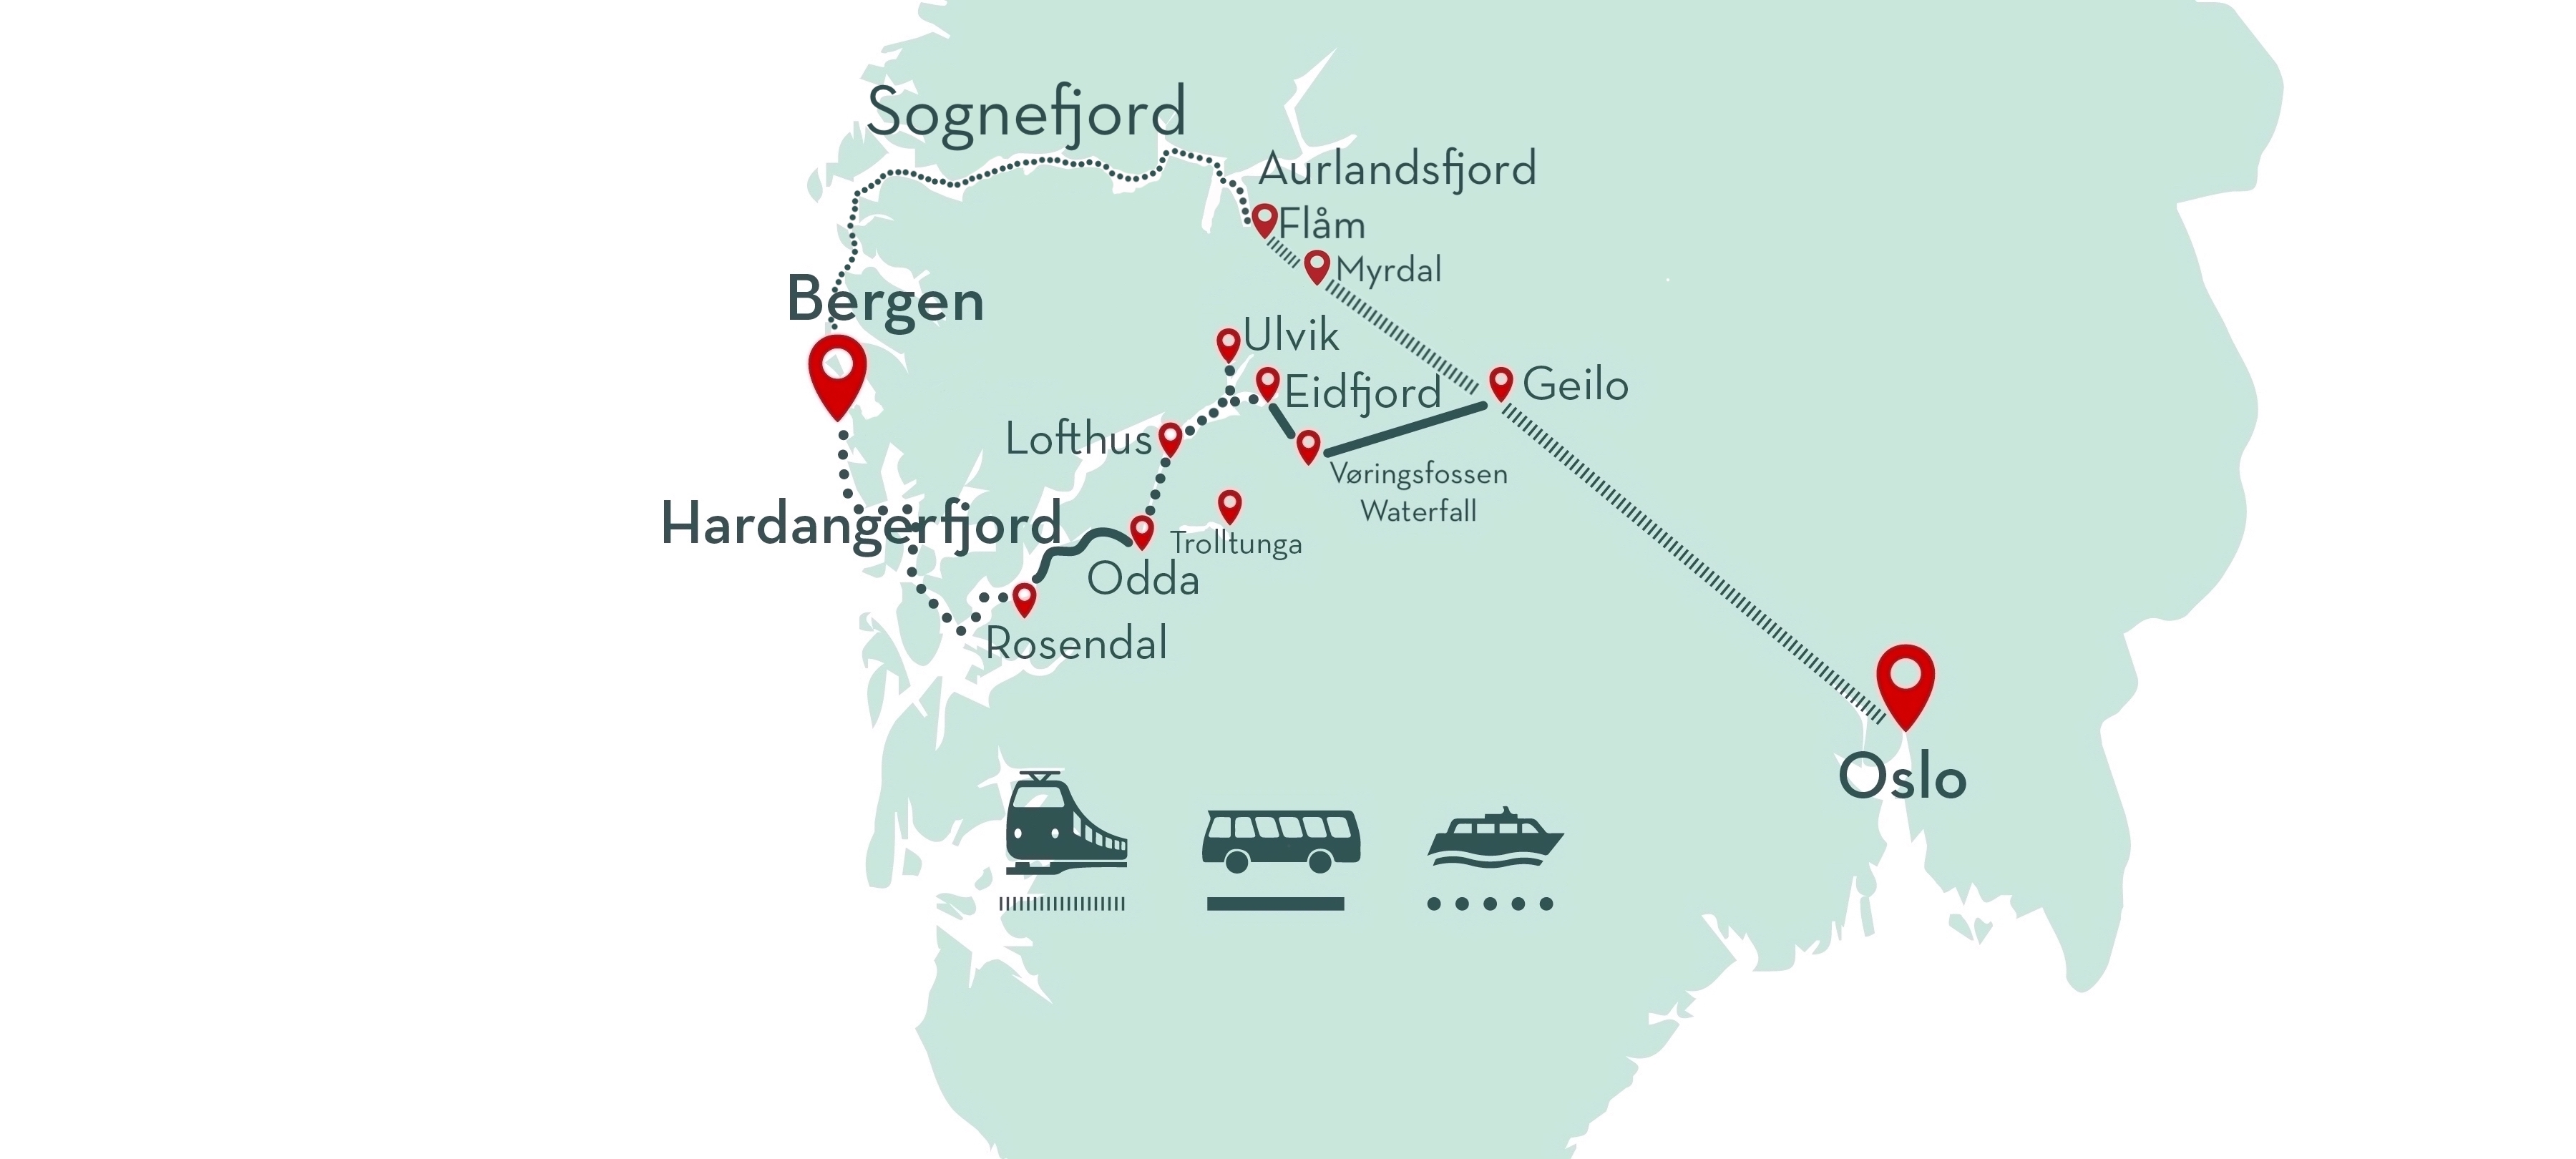 Sognefjorden with Hardangerfjord